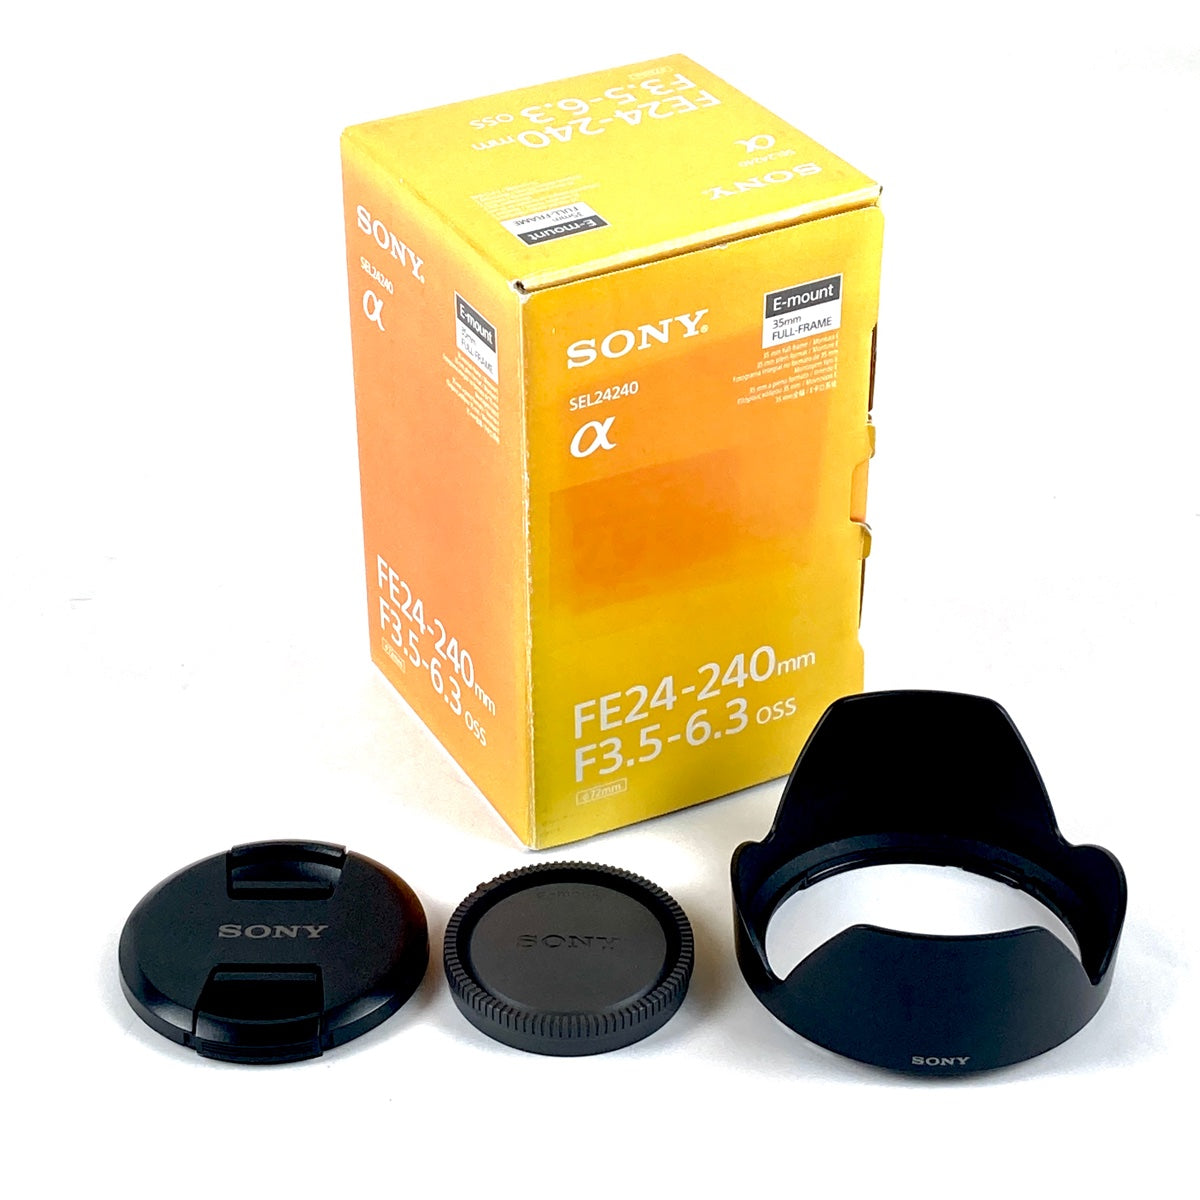 Sony FE 24-240mm F3.5-6.3 OSS SEL24240 - レンズ(ズーム)